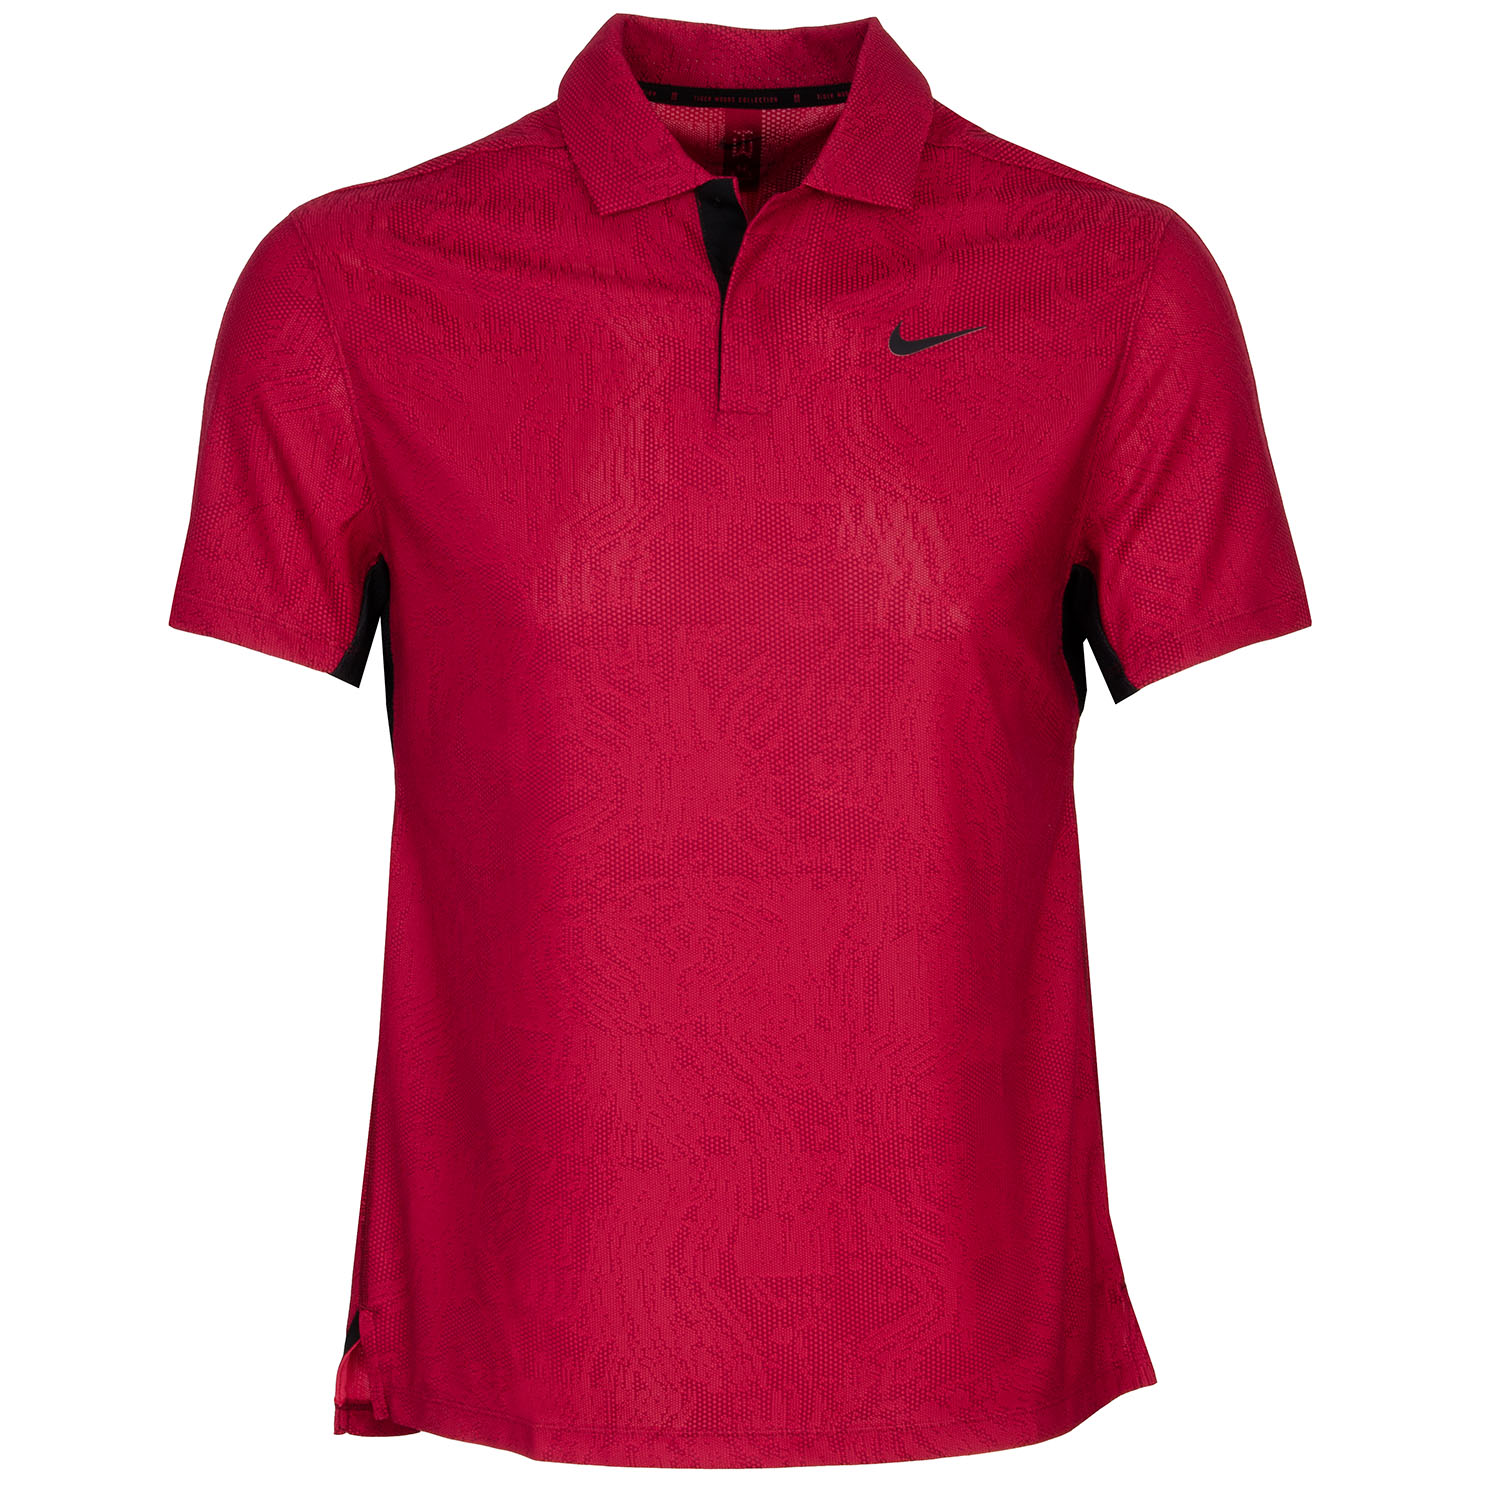 Nike Dri-FIT ADV Tiger Woods Jacquard Golf Polo Shirt